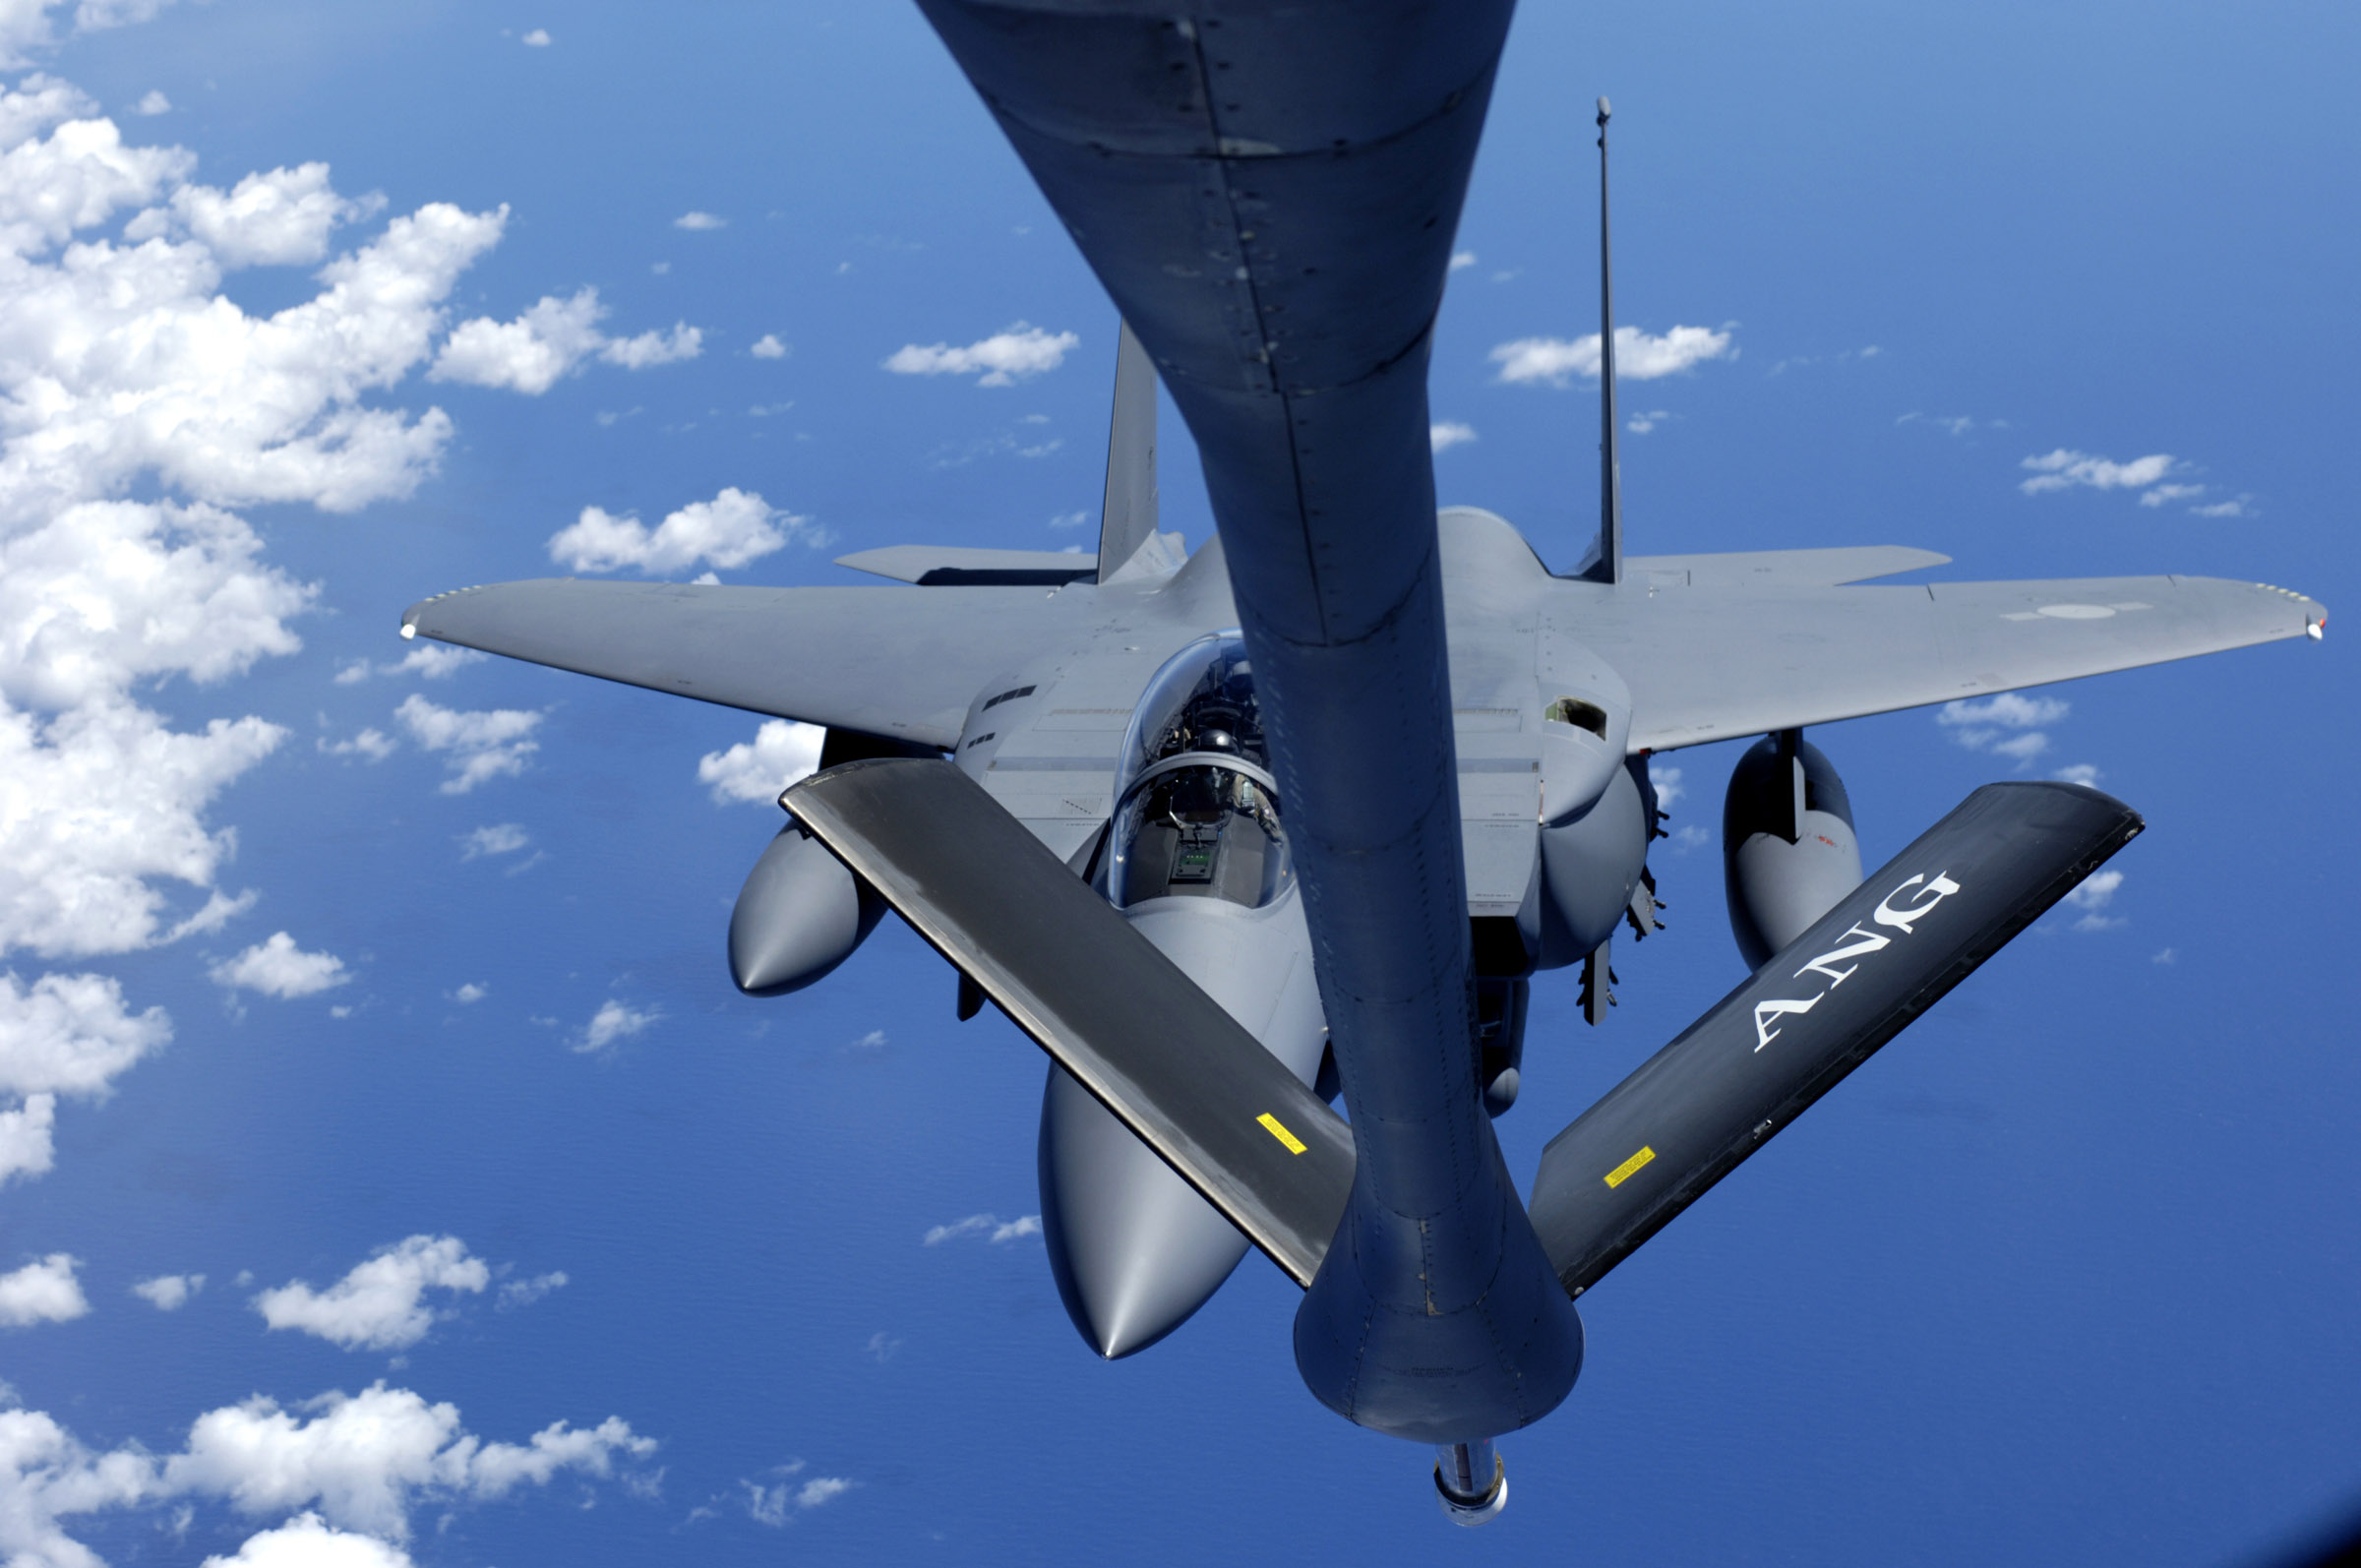 F-15K Slam Eagle